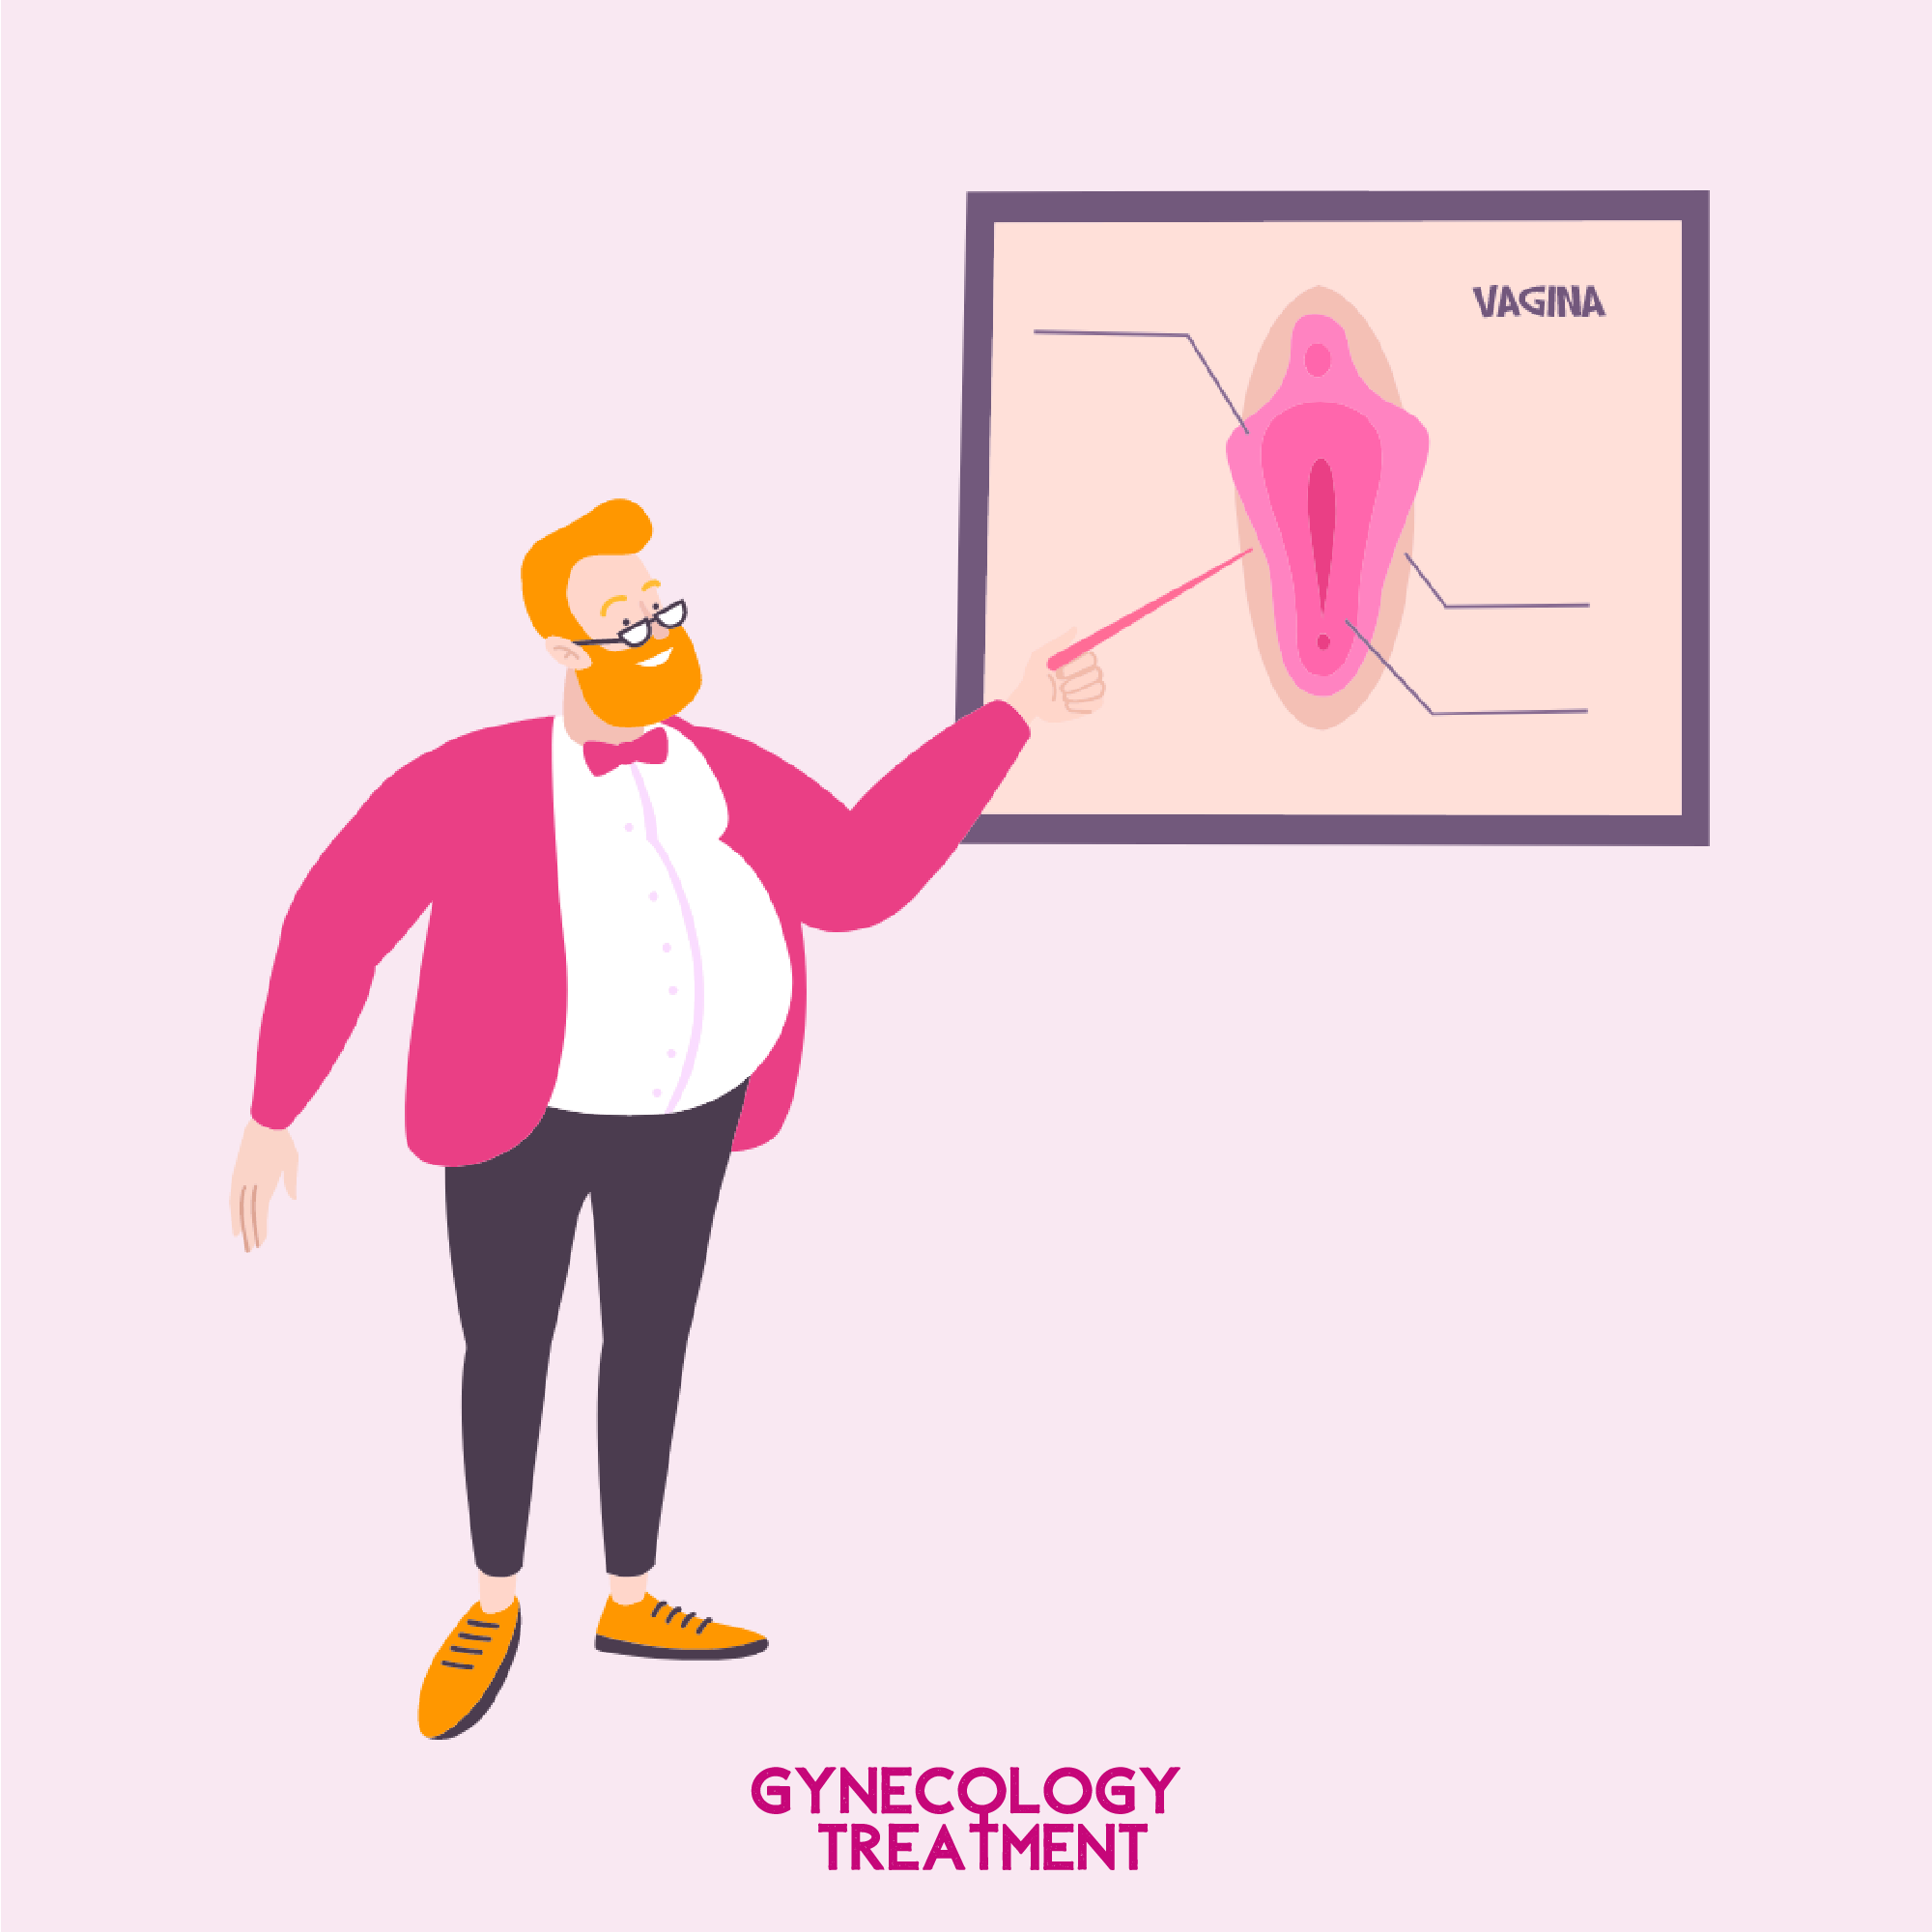 Cancer of the Vulva-Vagina